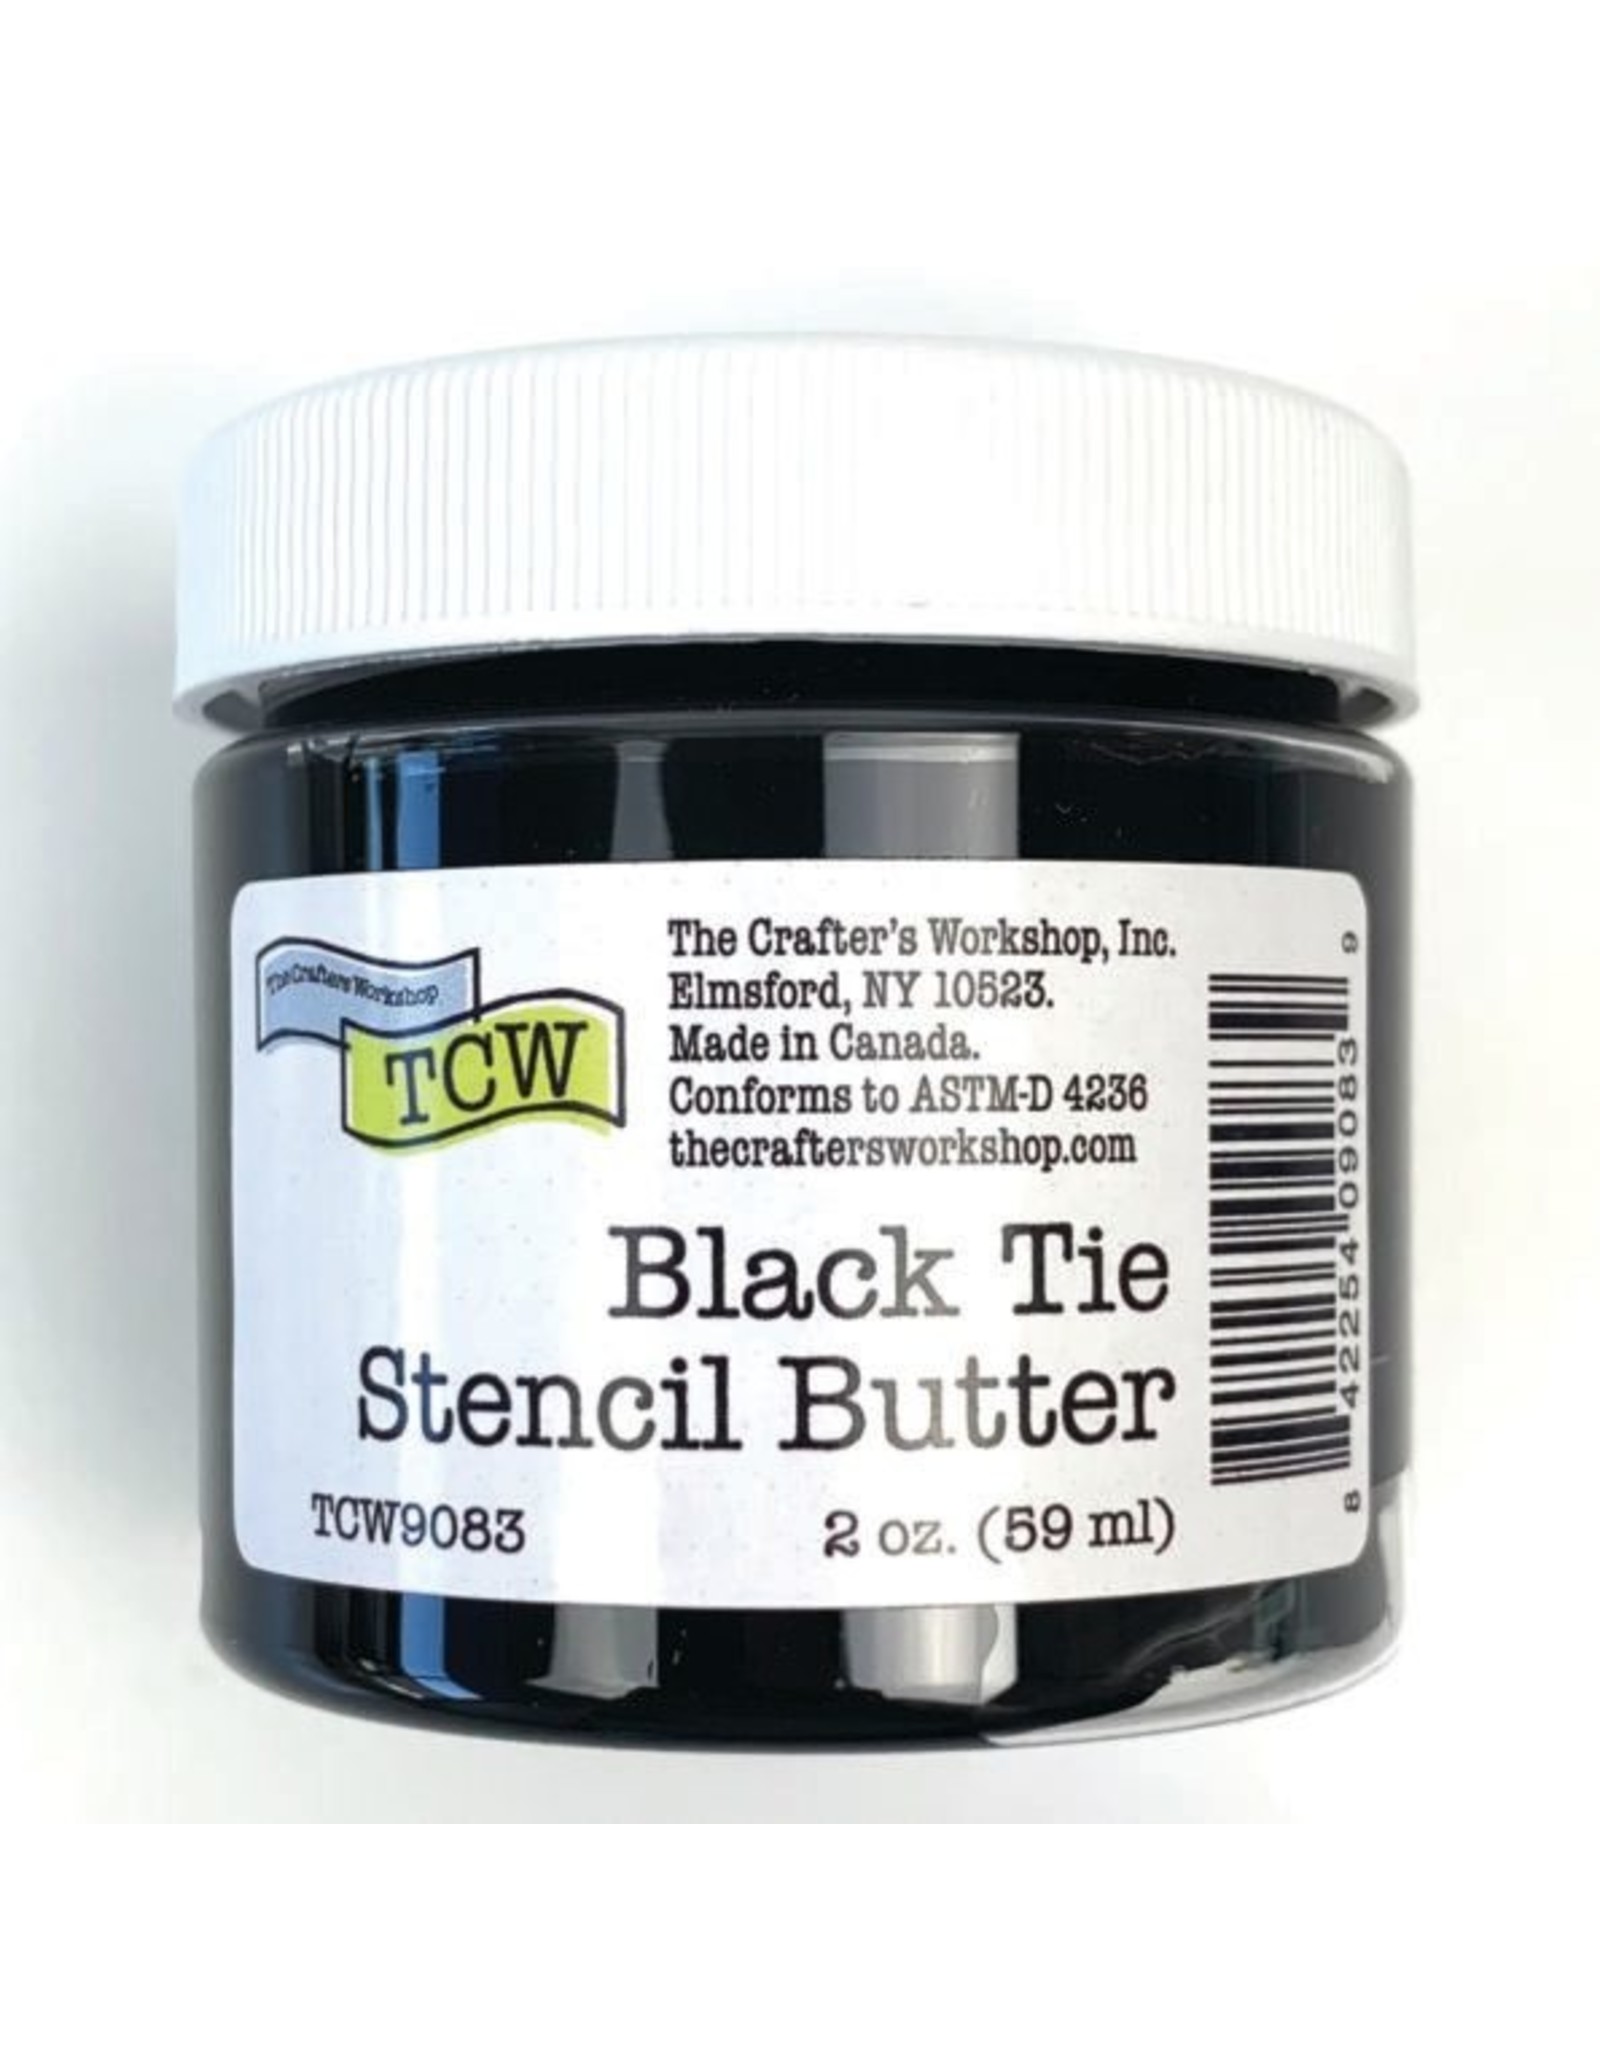 THE CRAFTERS WORKSHOP Stencil Butter  2 oz.  - Black Tie